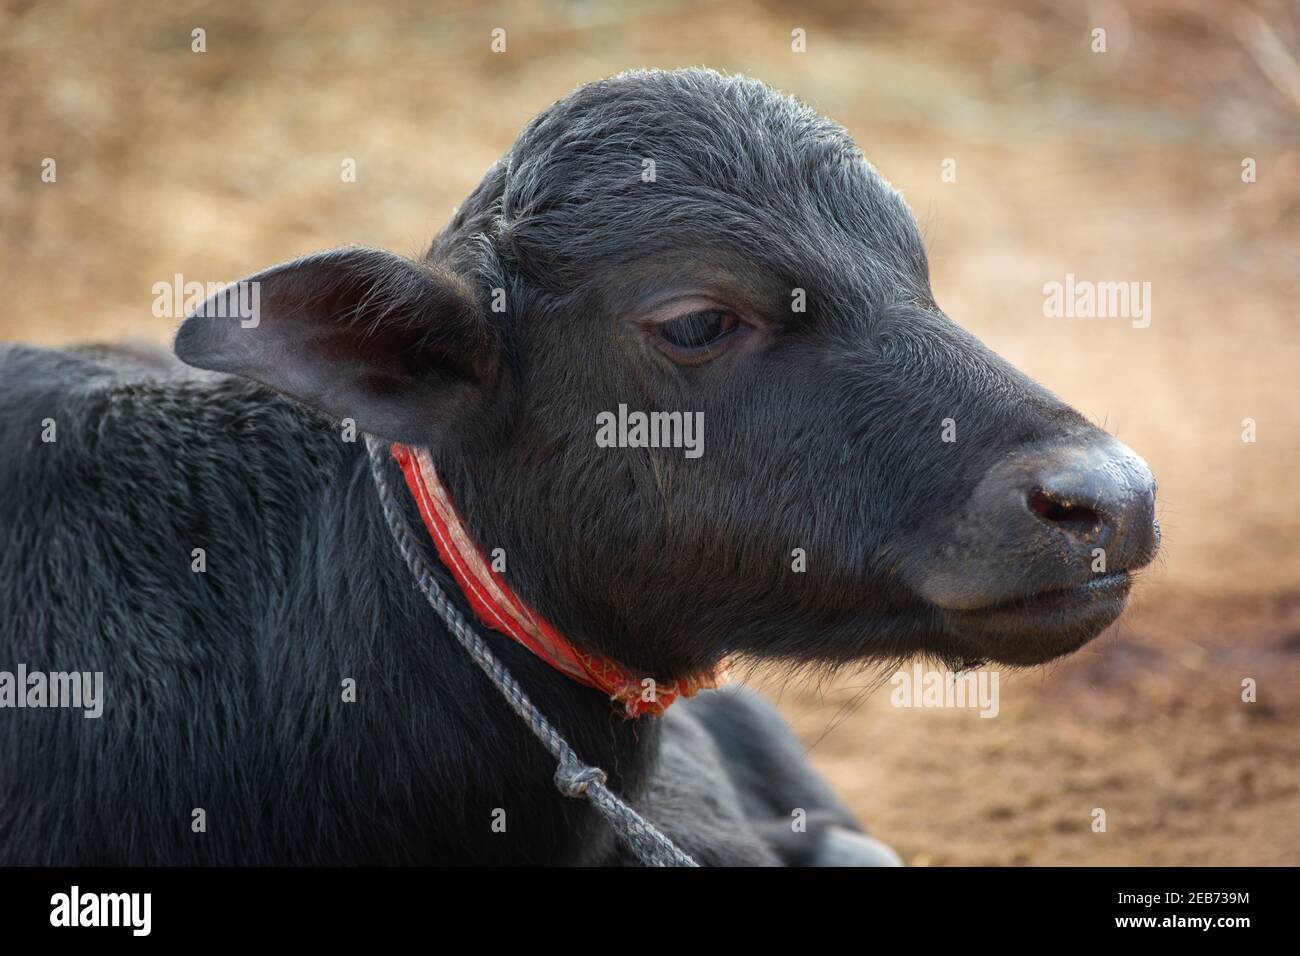 Baby buffalo in rural Stock Photo Alamy